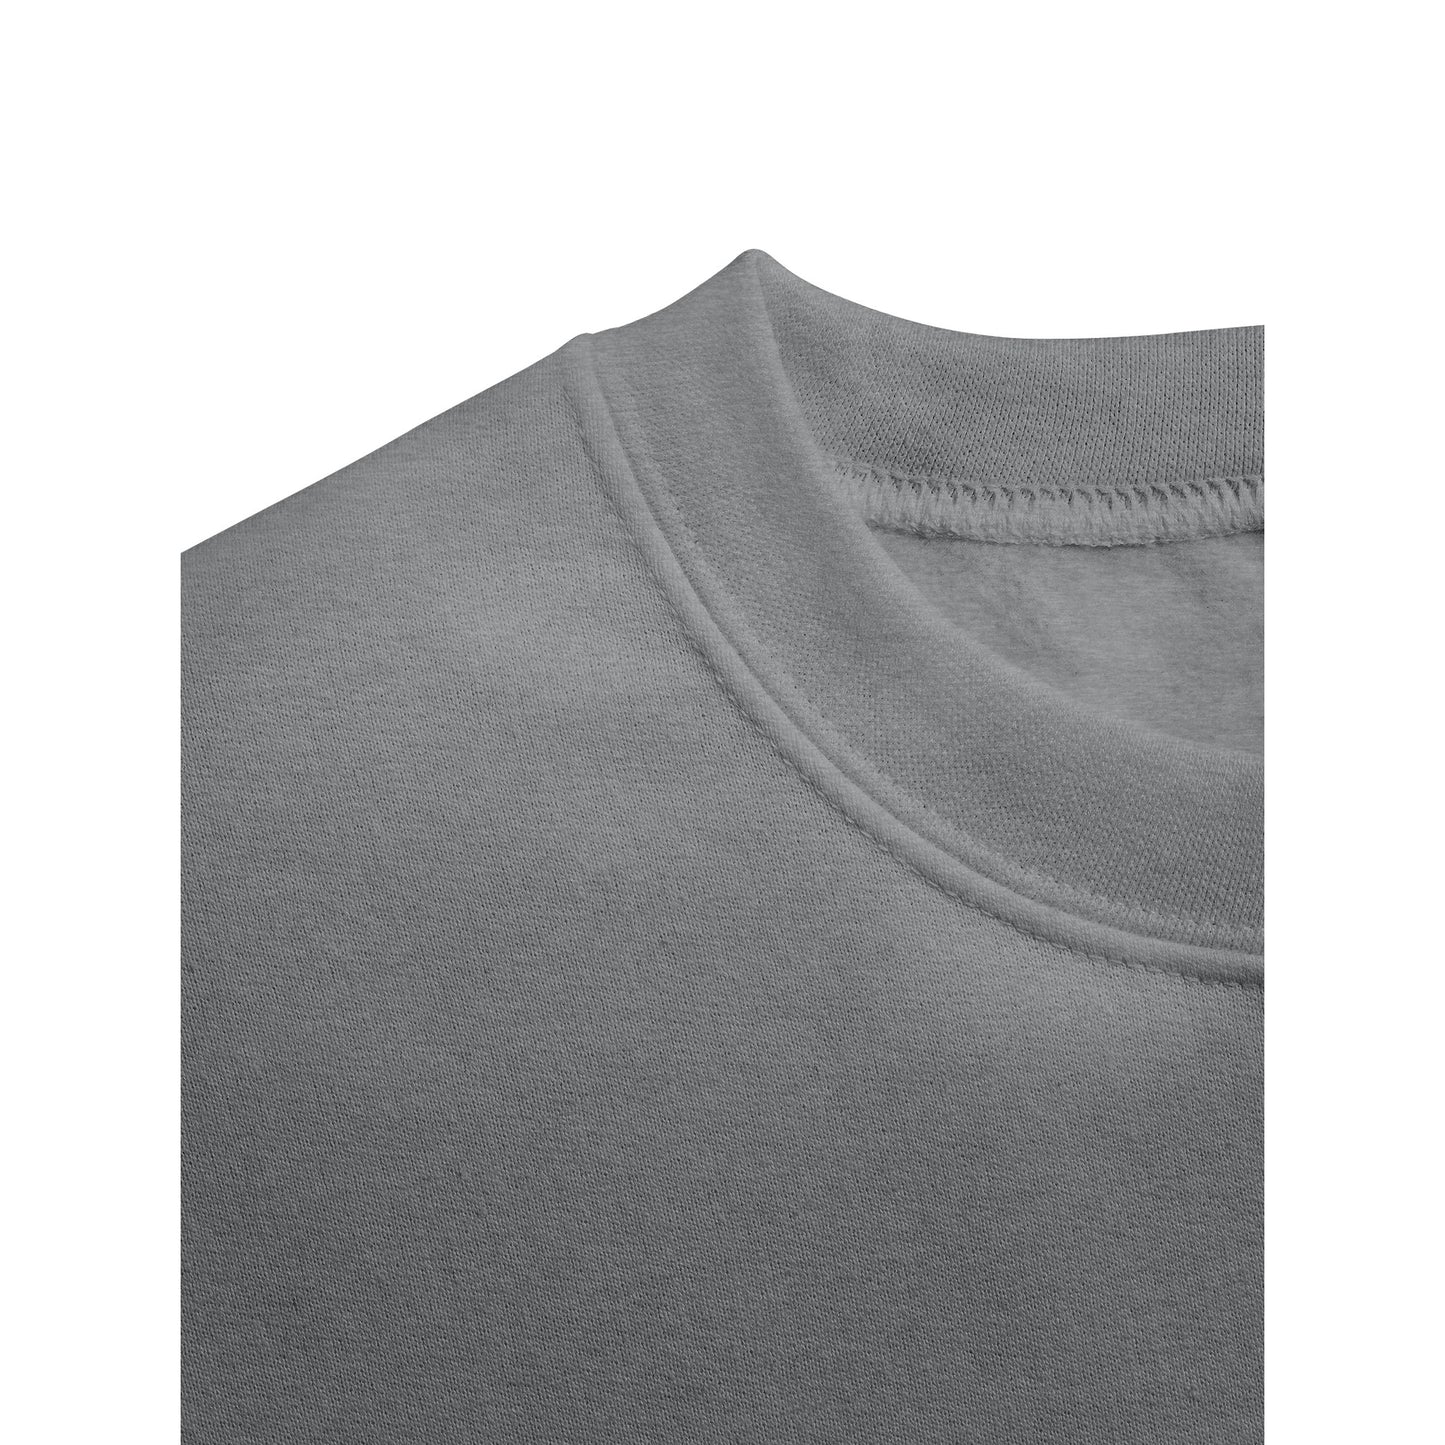 FUMIGANS FRATRIBUS / Sweatshirt / sports grey